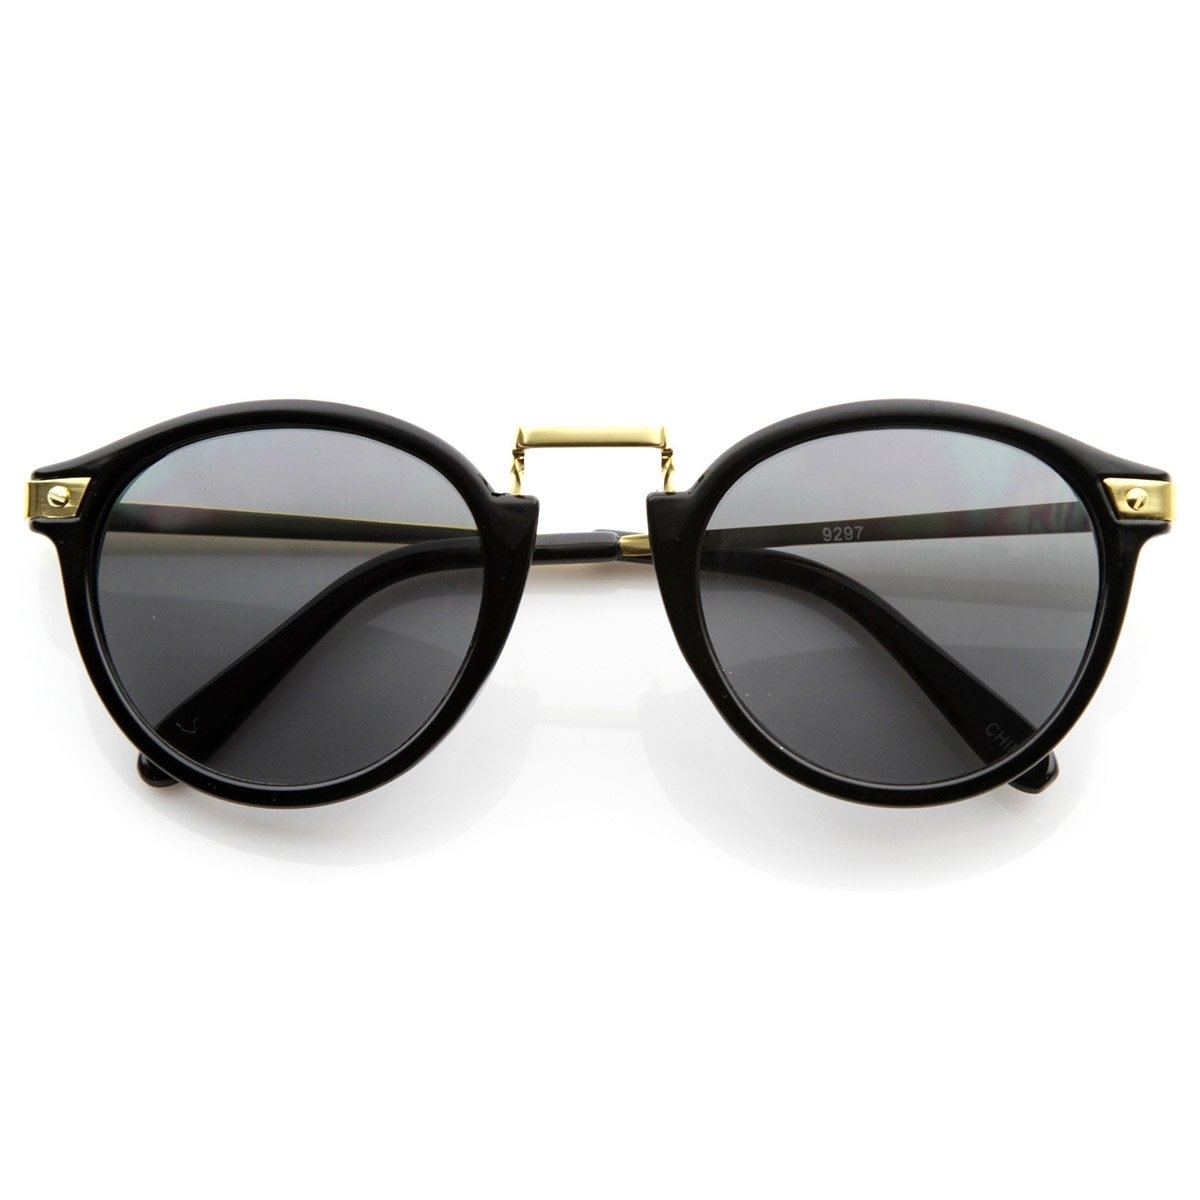 Vintage Inspired Round Horned Rim P-3 Frame Retro Sunglasses - Shiny Black-Silver